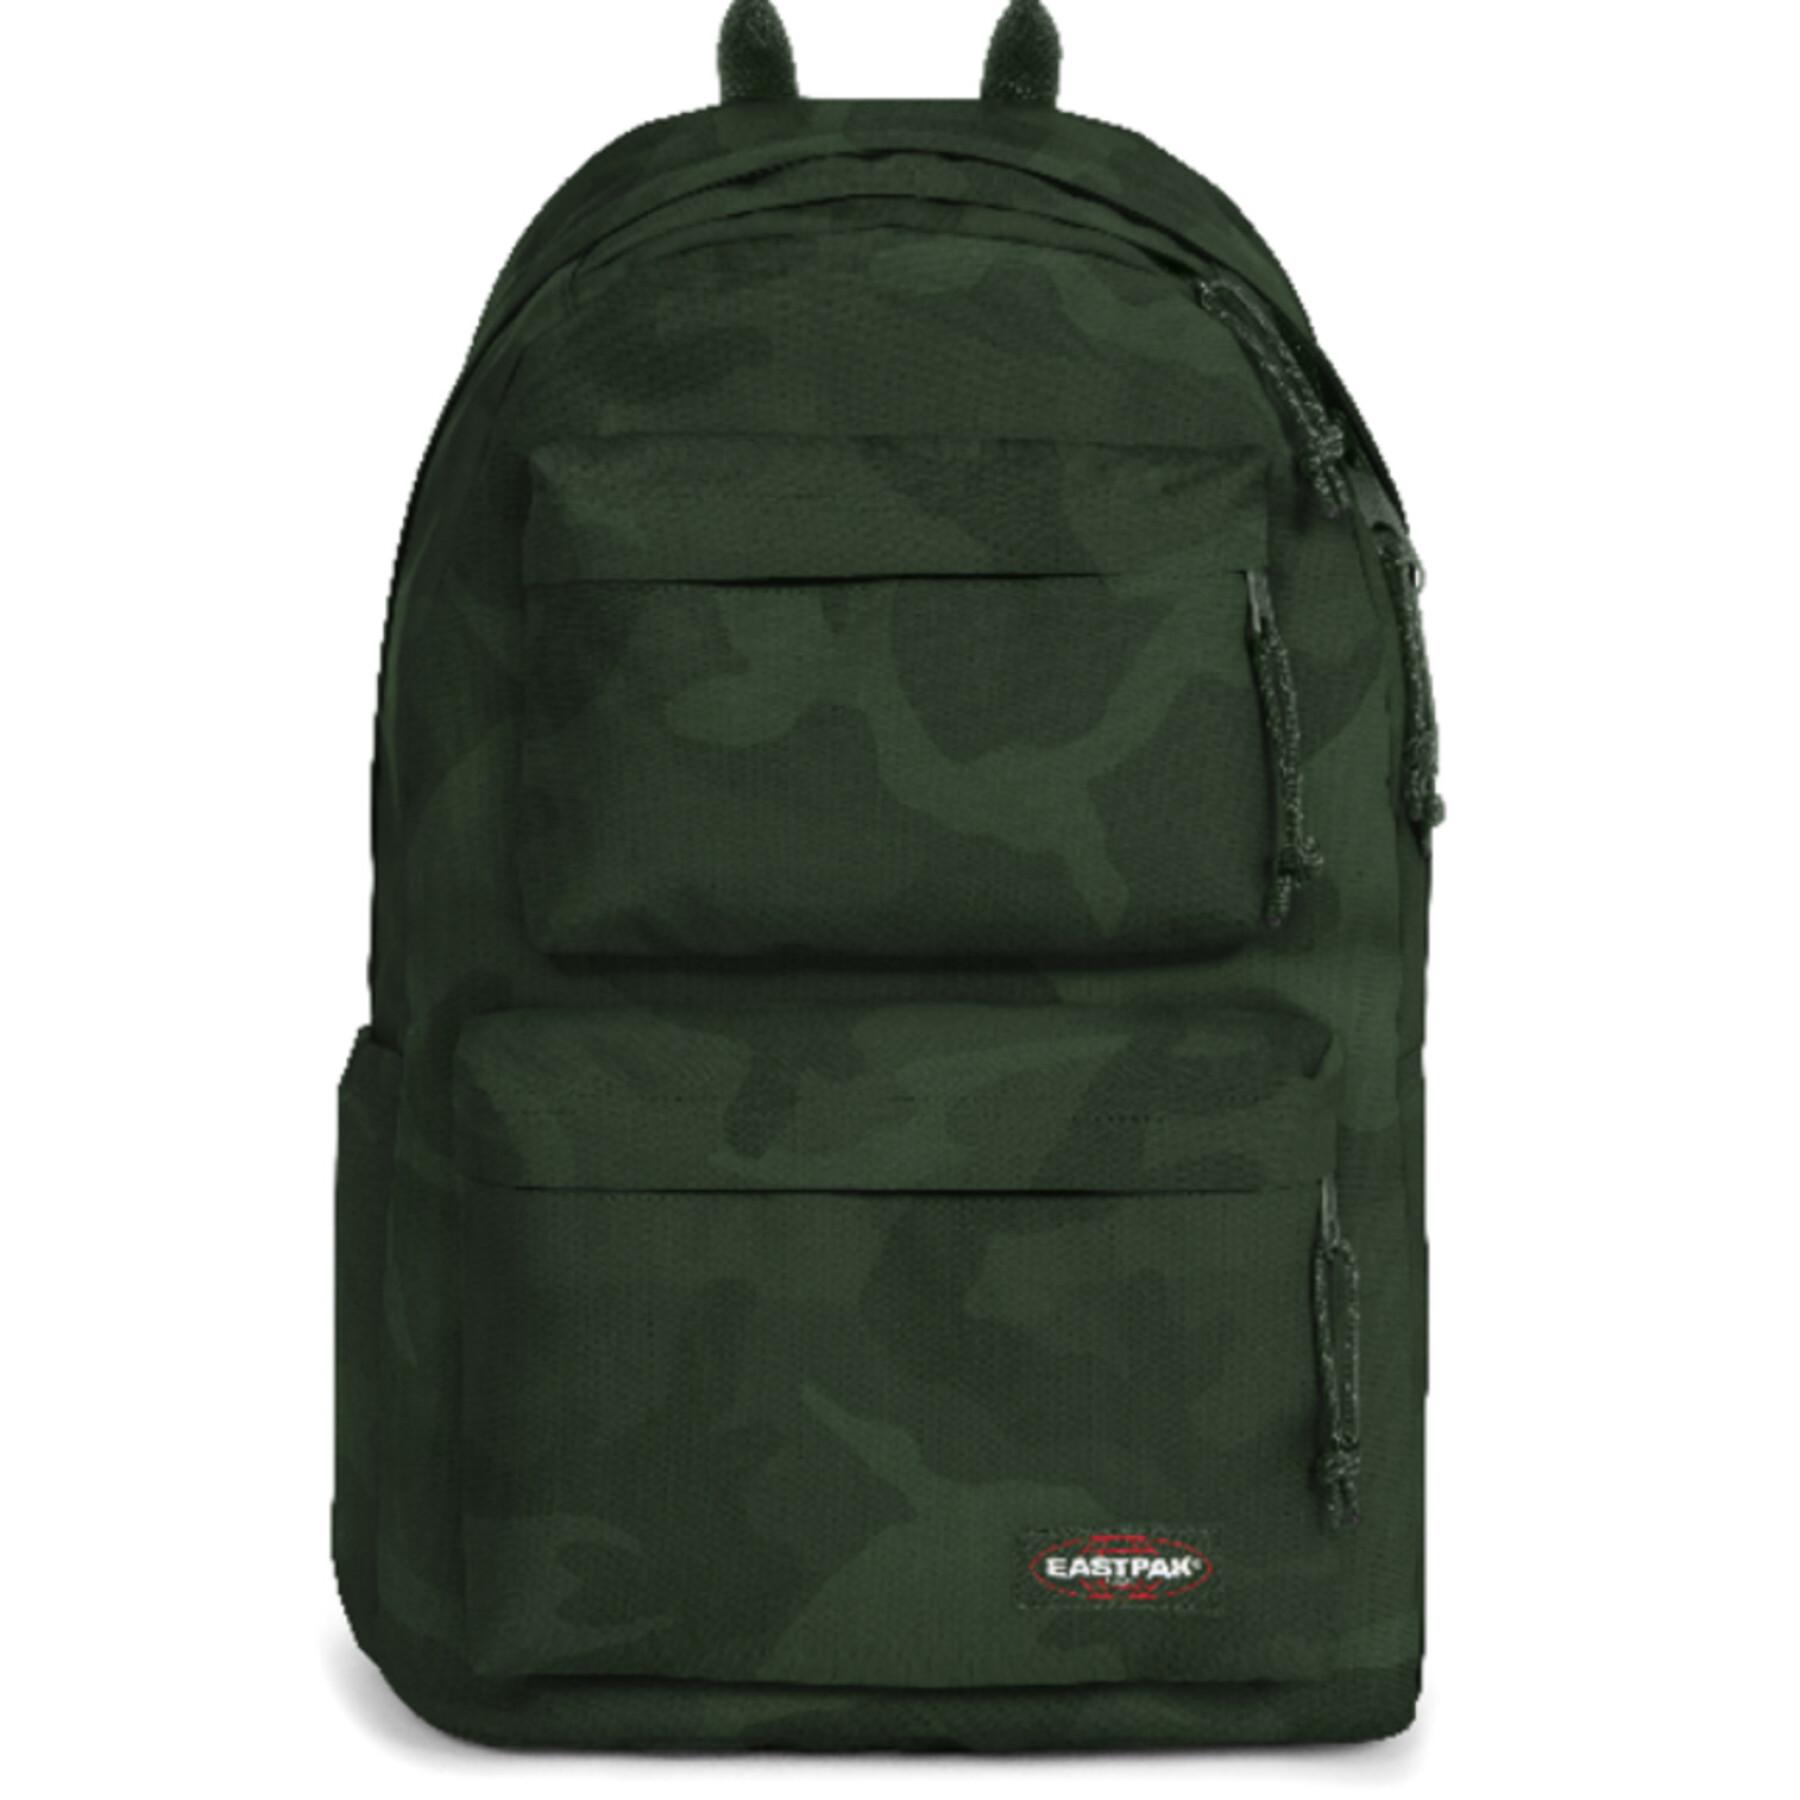 Backpack Eastpak Padded Double